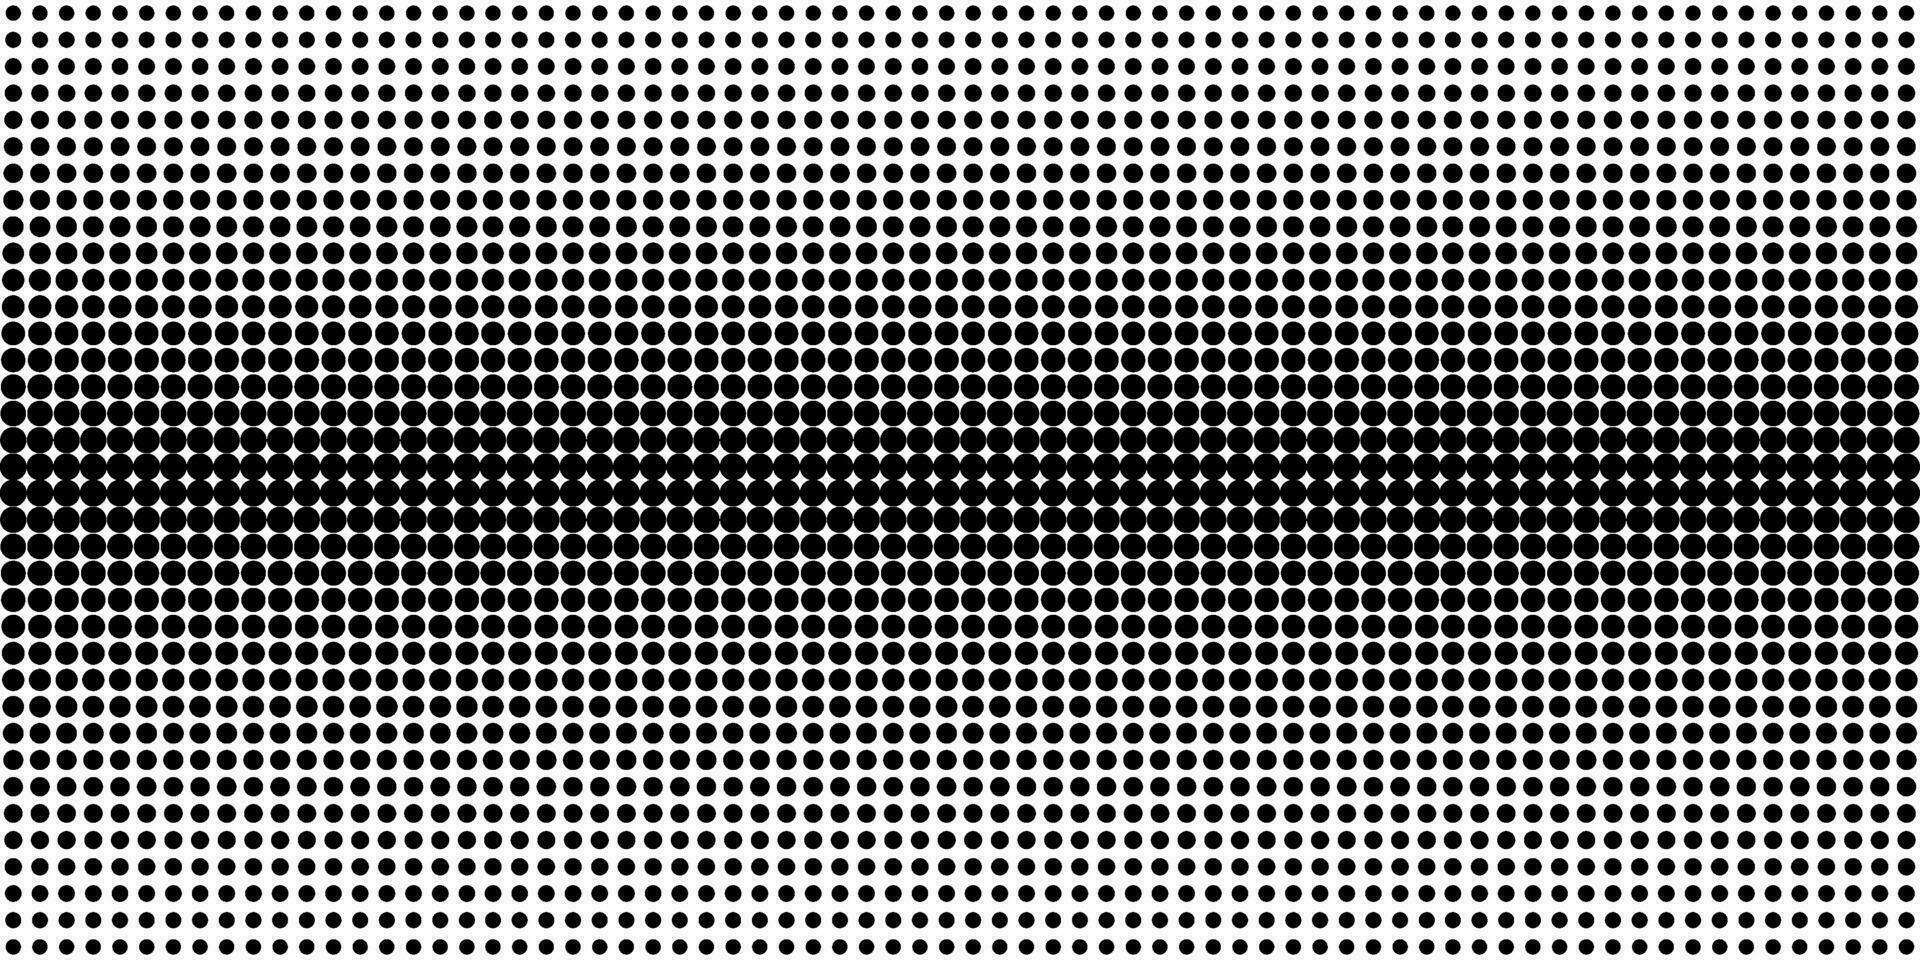 abstract halftone grunge vector helling vorm achtergrond